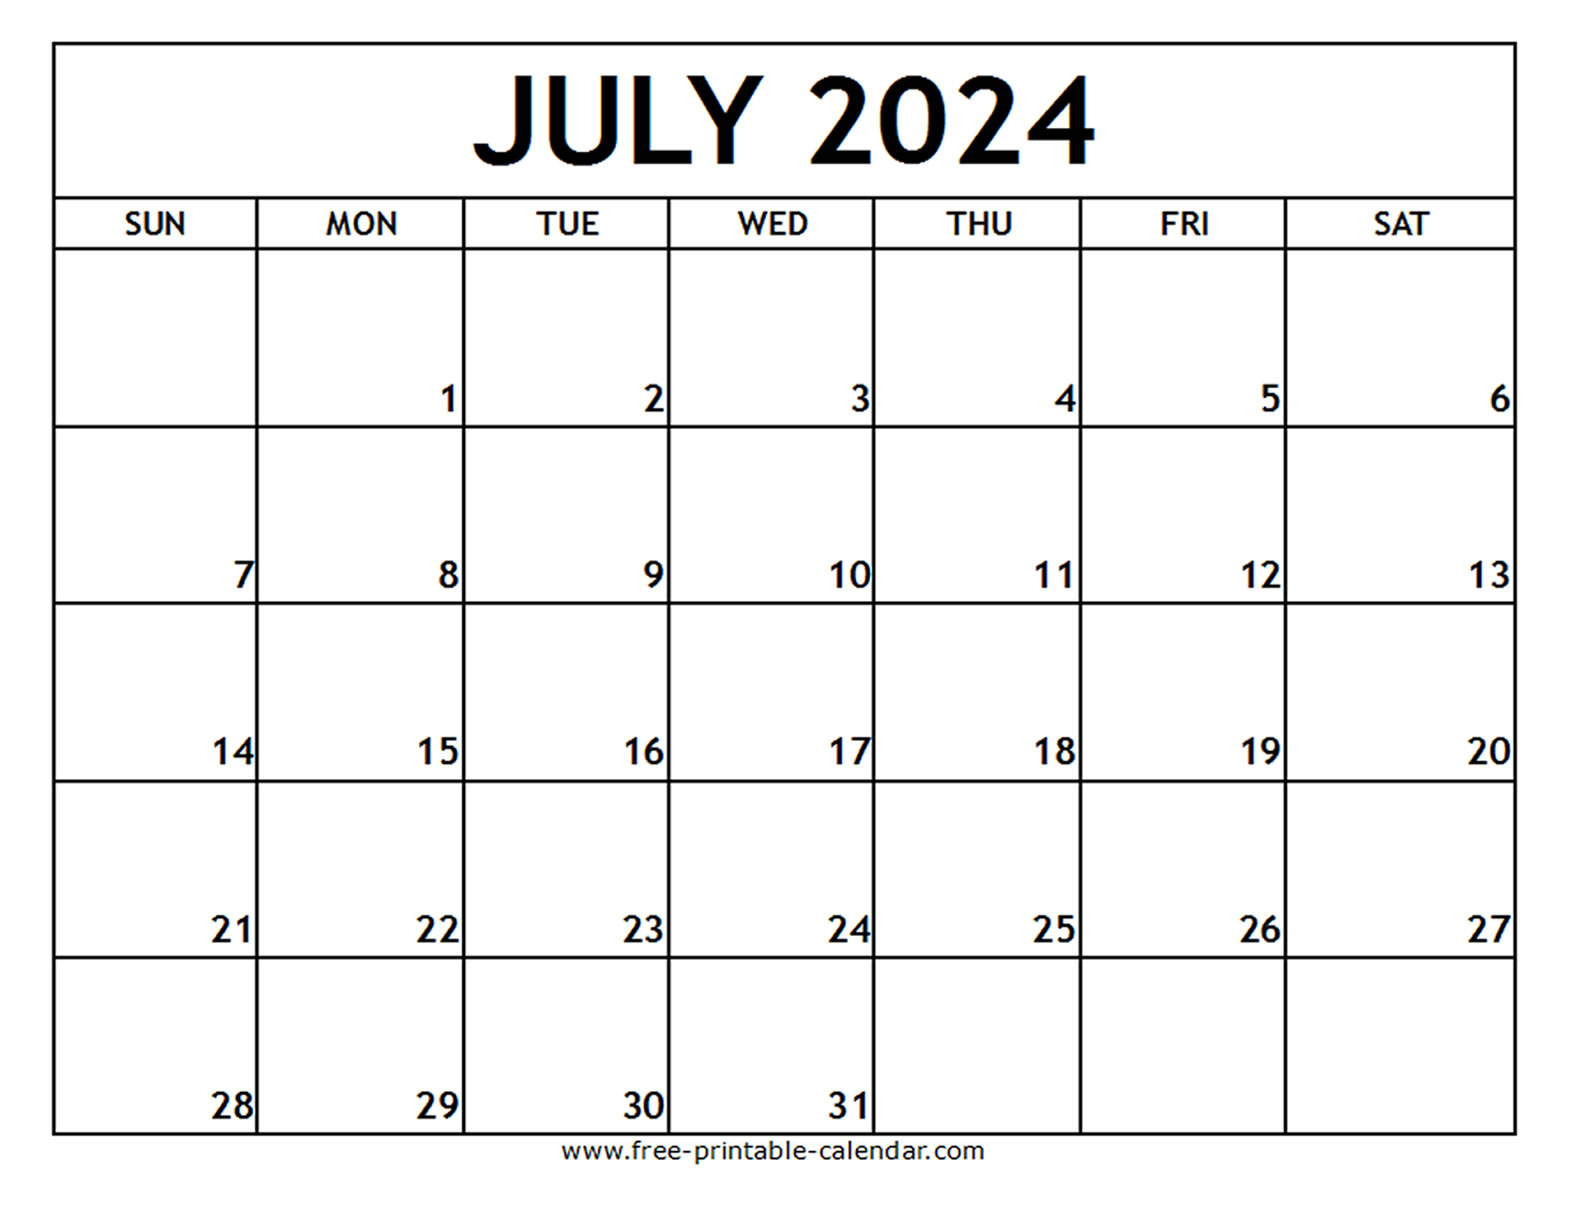 July 2024 Printable Calendar - Free-Printable-Calendar with regard to Free July 2024 Calendar Template